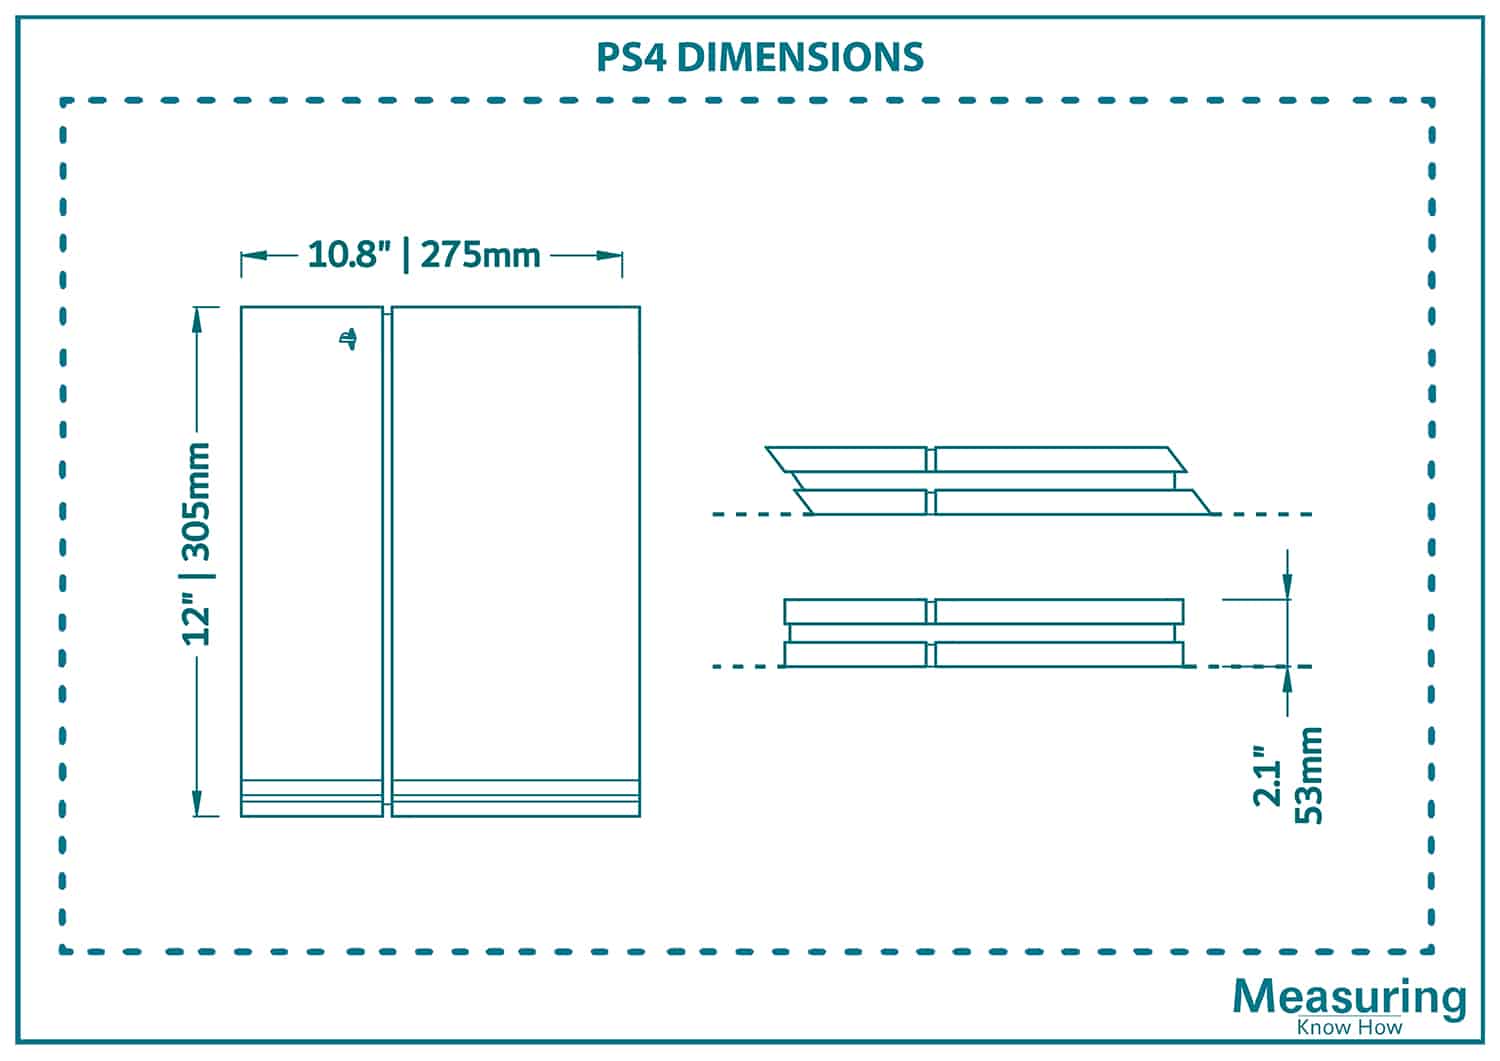 PS4 Dimensions